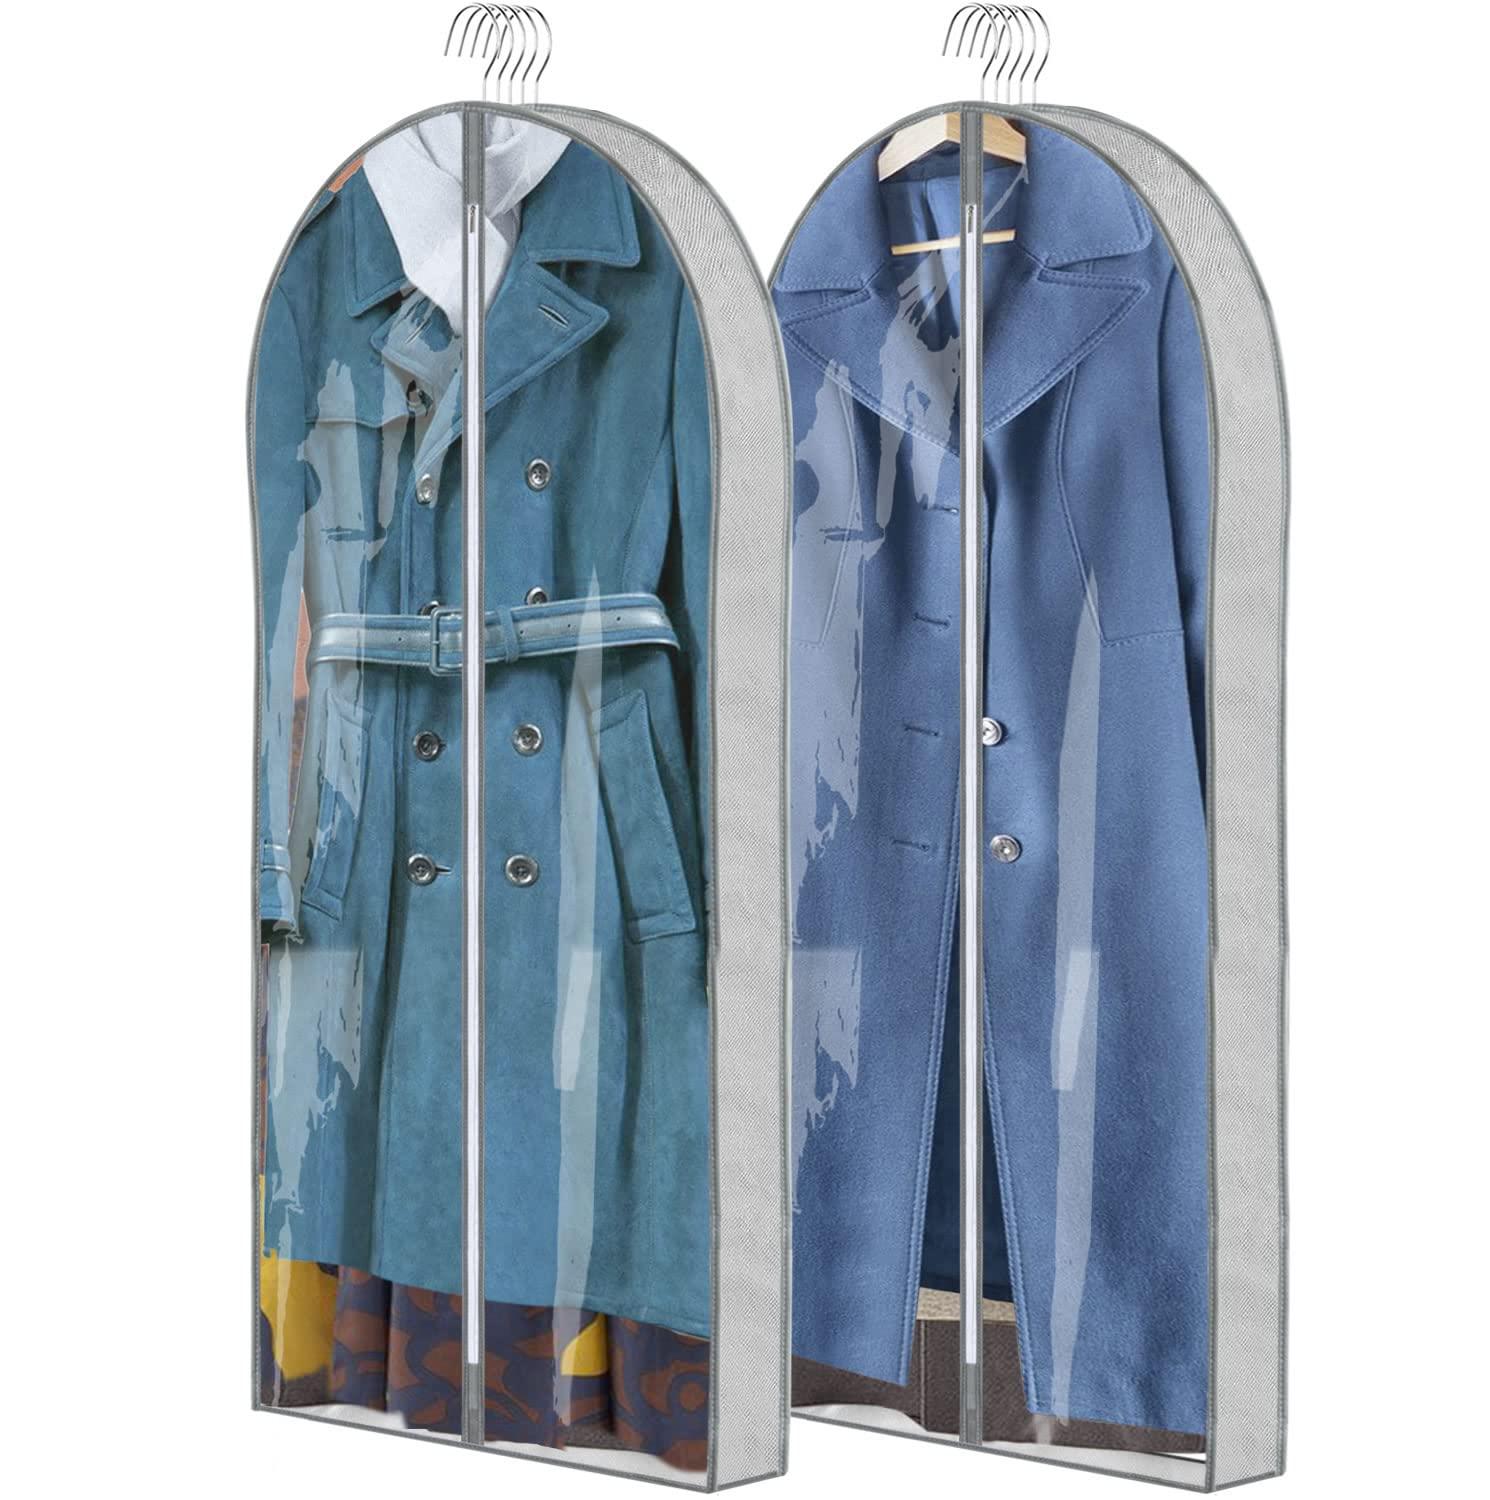 ZSURLUX Dress Bags Covers 60 x 150cm 2Pack, Hanging Dress Storage Bag, Long Garment Bags for Dresses, Long Coat, White